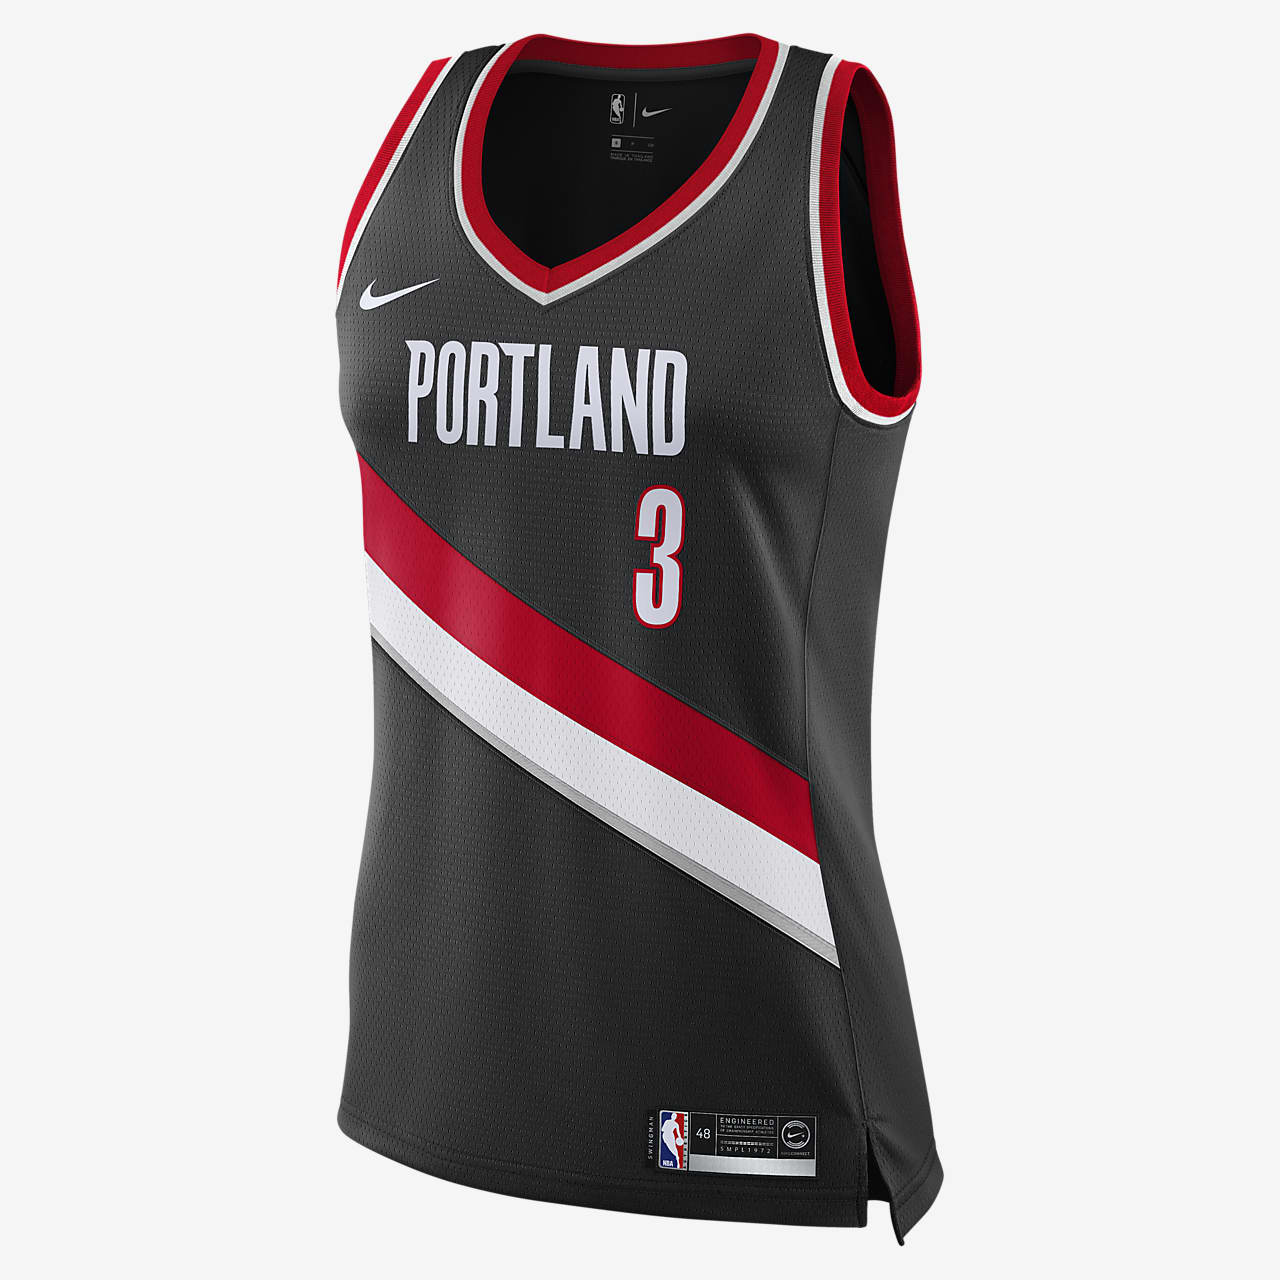 Gray Portland Trailblazers NBA Jerseys for sale